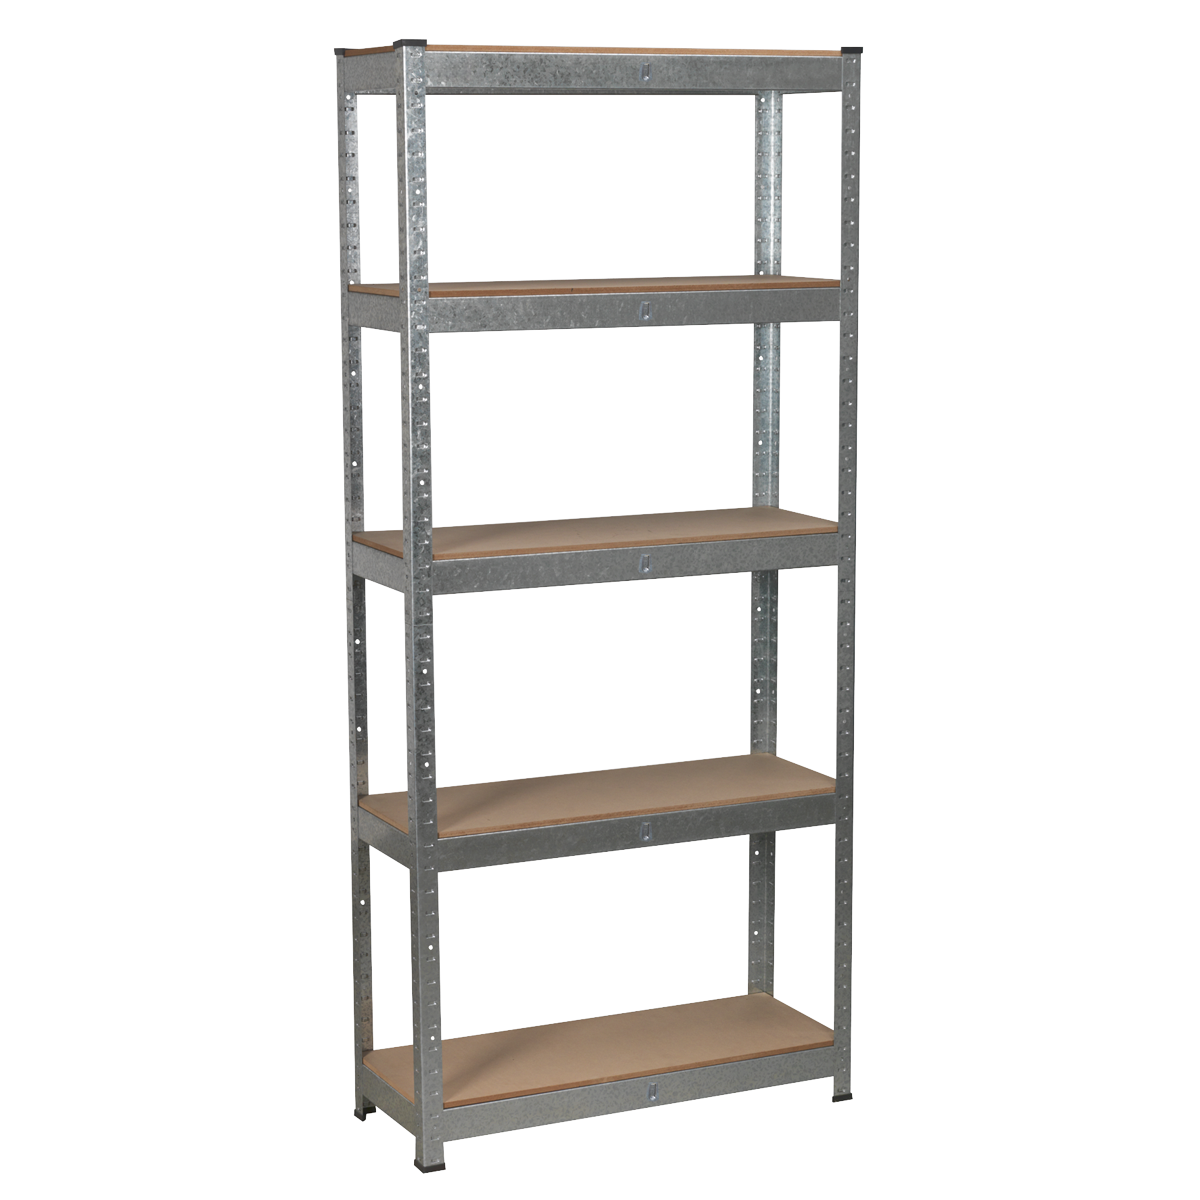 Racking Unit 5 Shelf 150kg Capacity Per Level